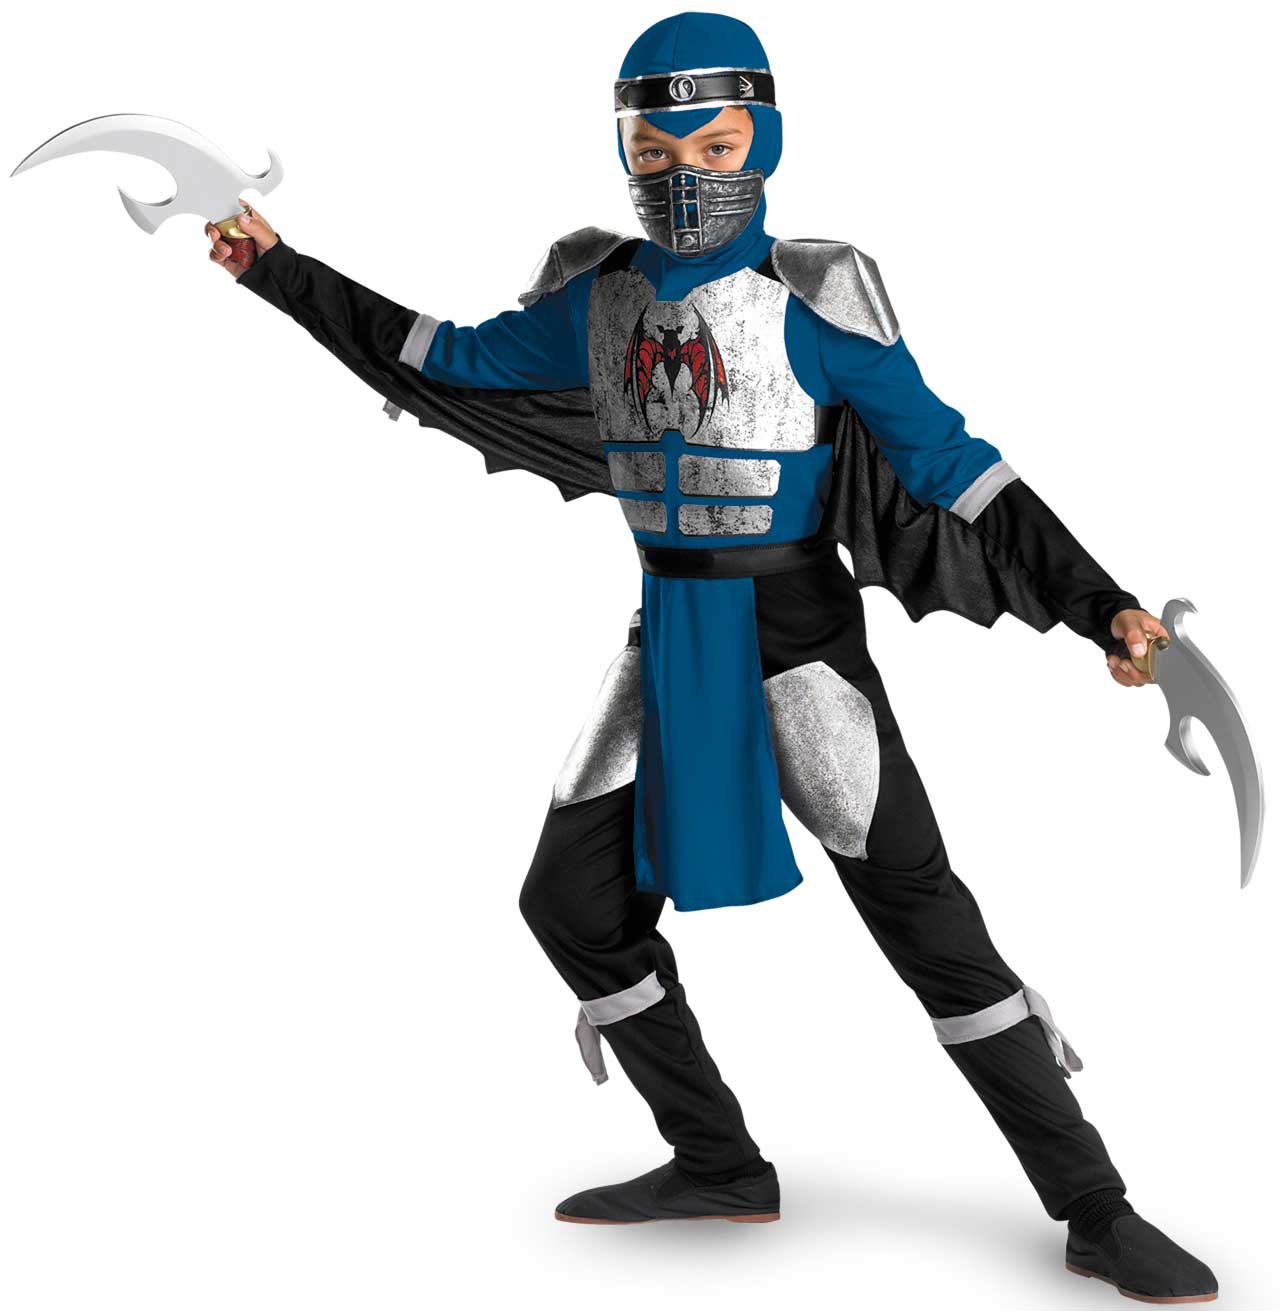 Blue Ninja Costume For Kids